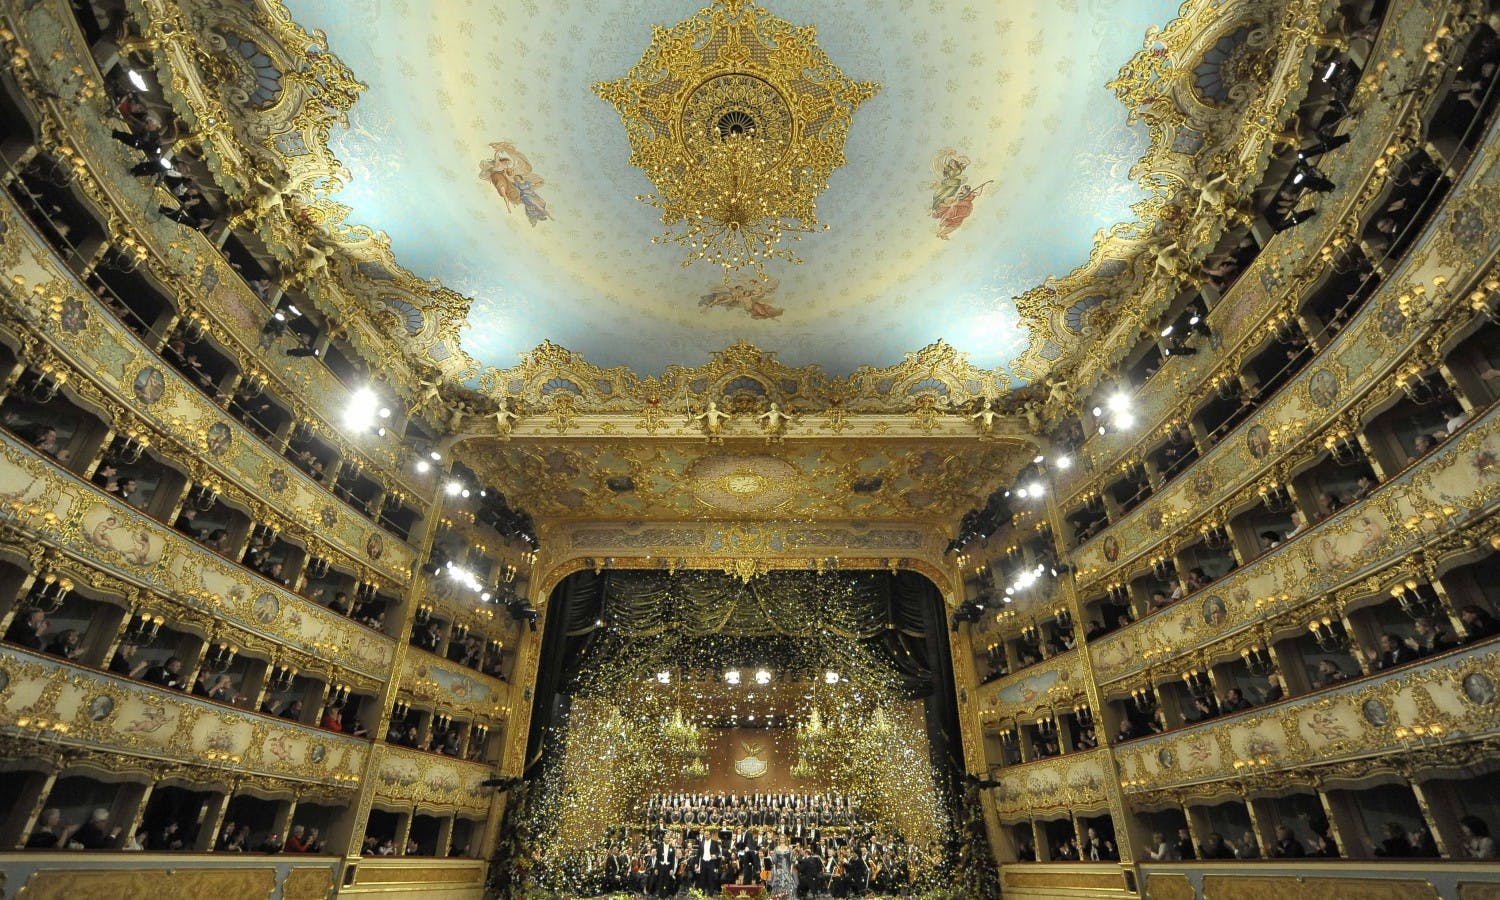 Teater Italia: Lambang Seni, Budaya, dan Keindahan